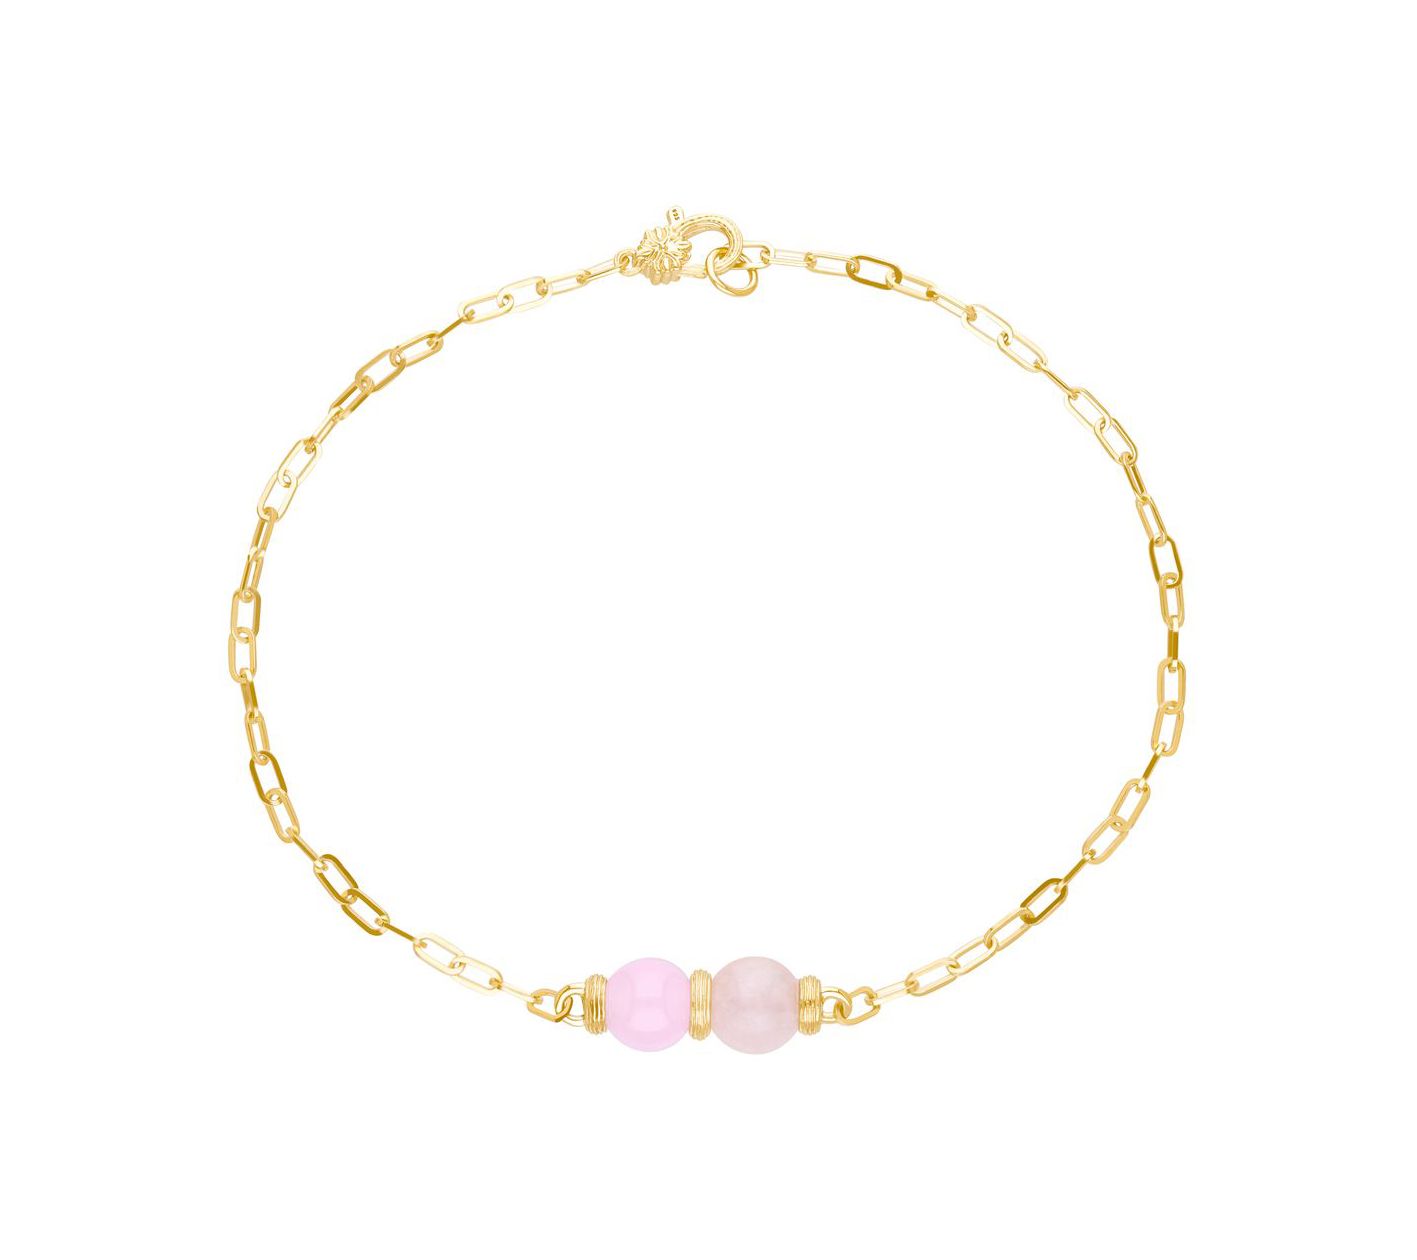 Ariva 18K Gold Clad Pink Jade Ankle Bracelet - QVC.com